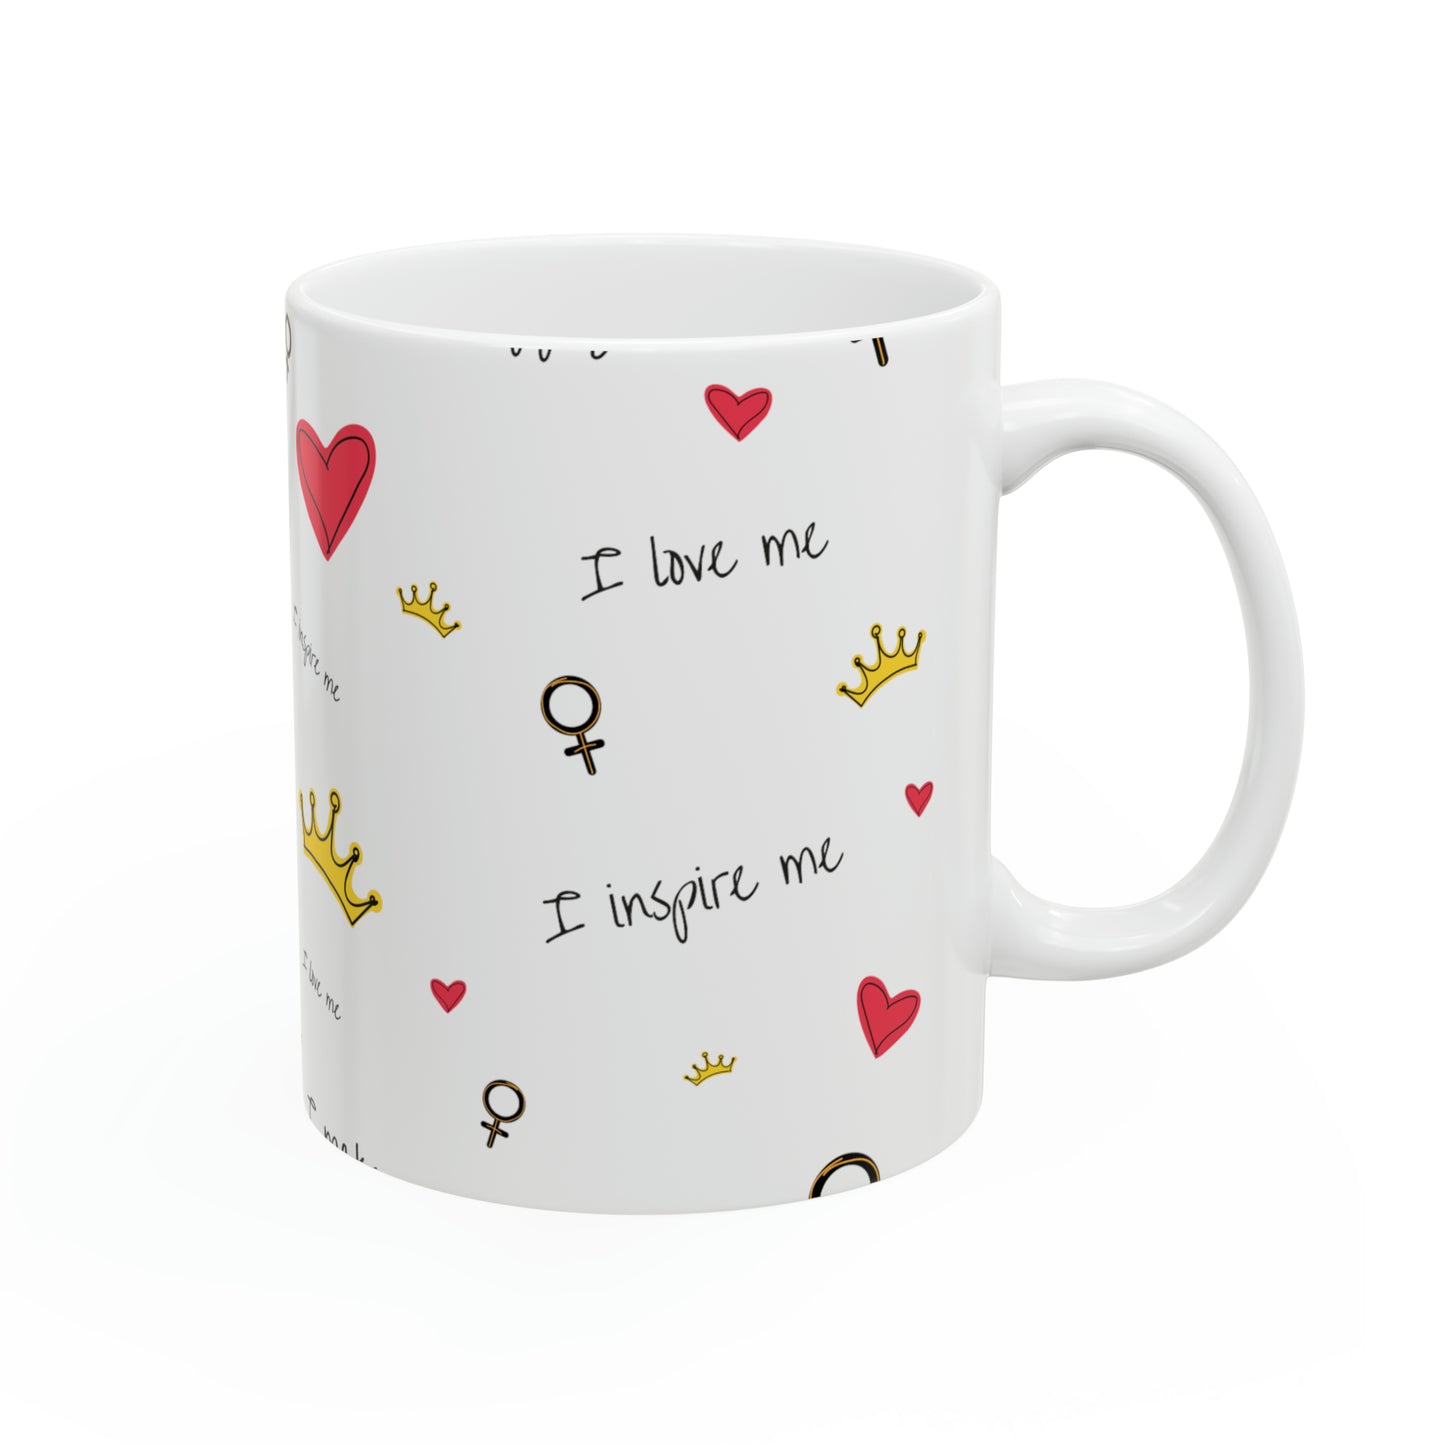 Gurly-Ceramic Mug, 11oz